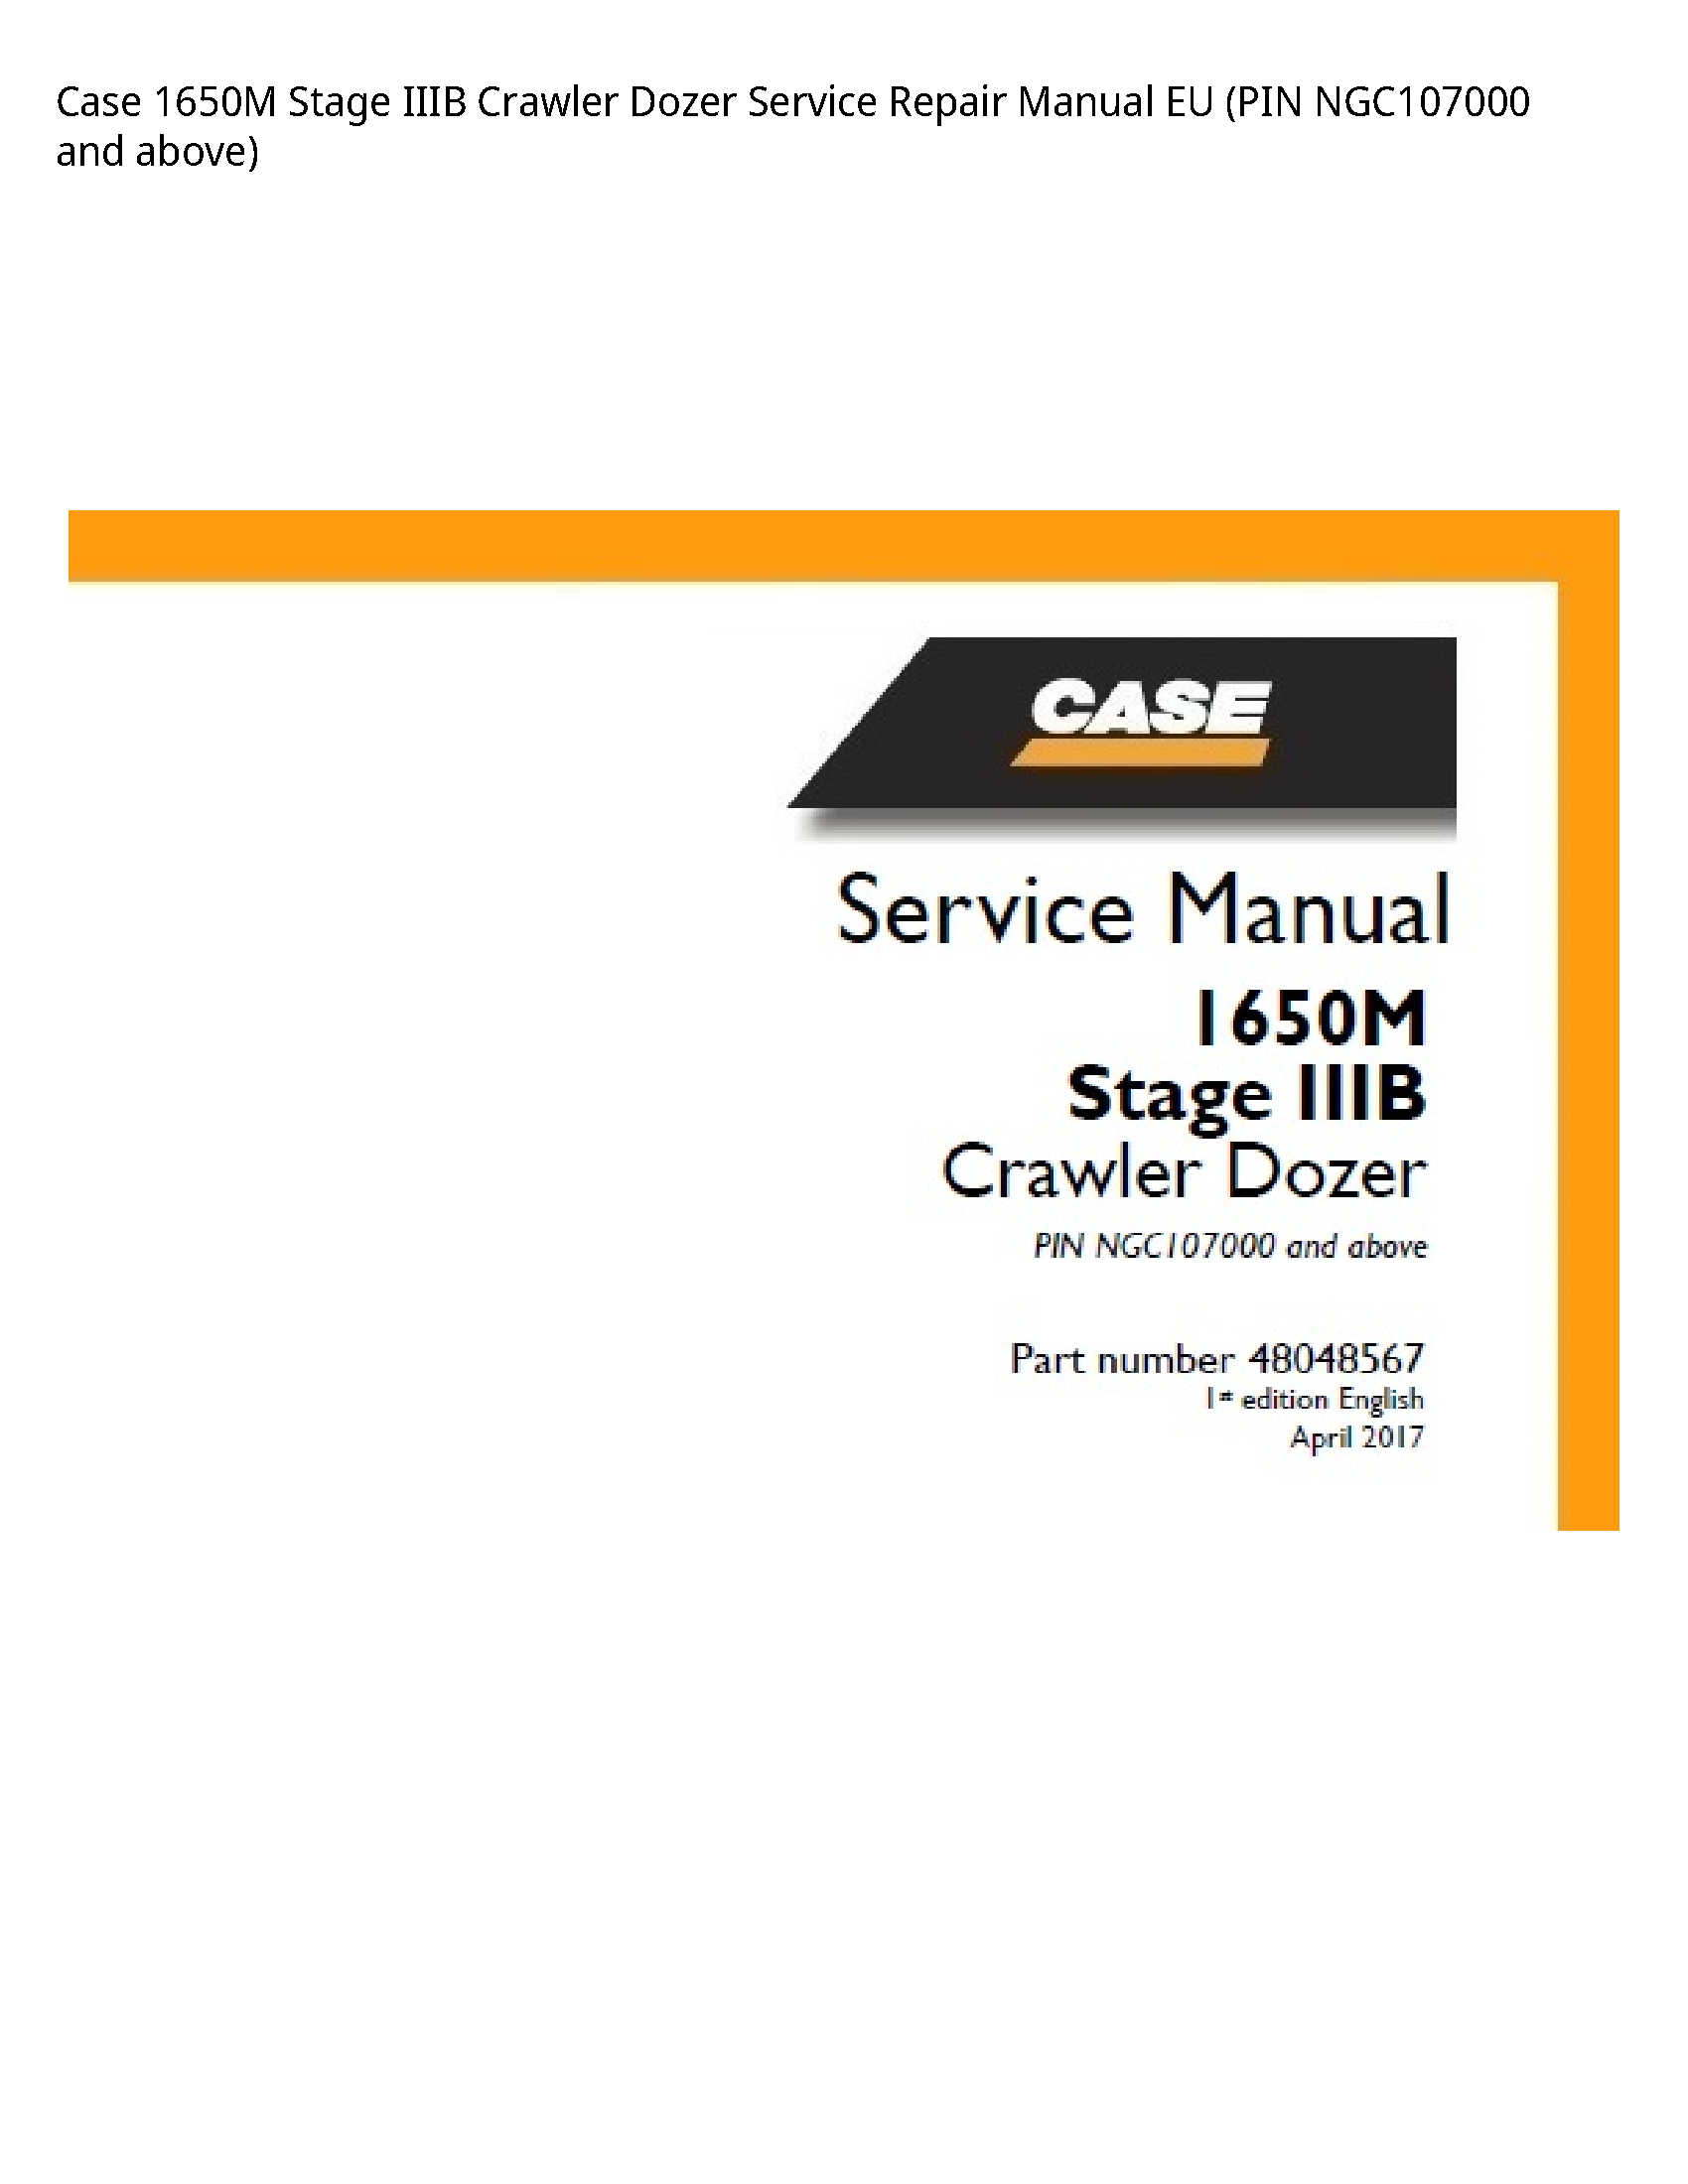 Case/Case IH 1650M Stage IIIB Crawler Dozer manual